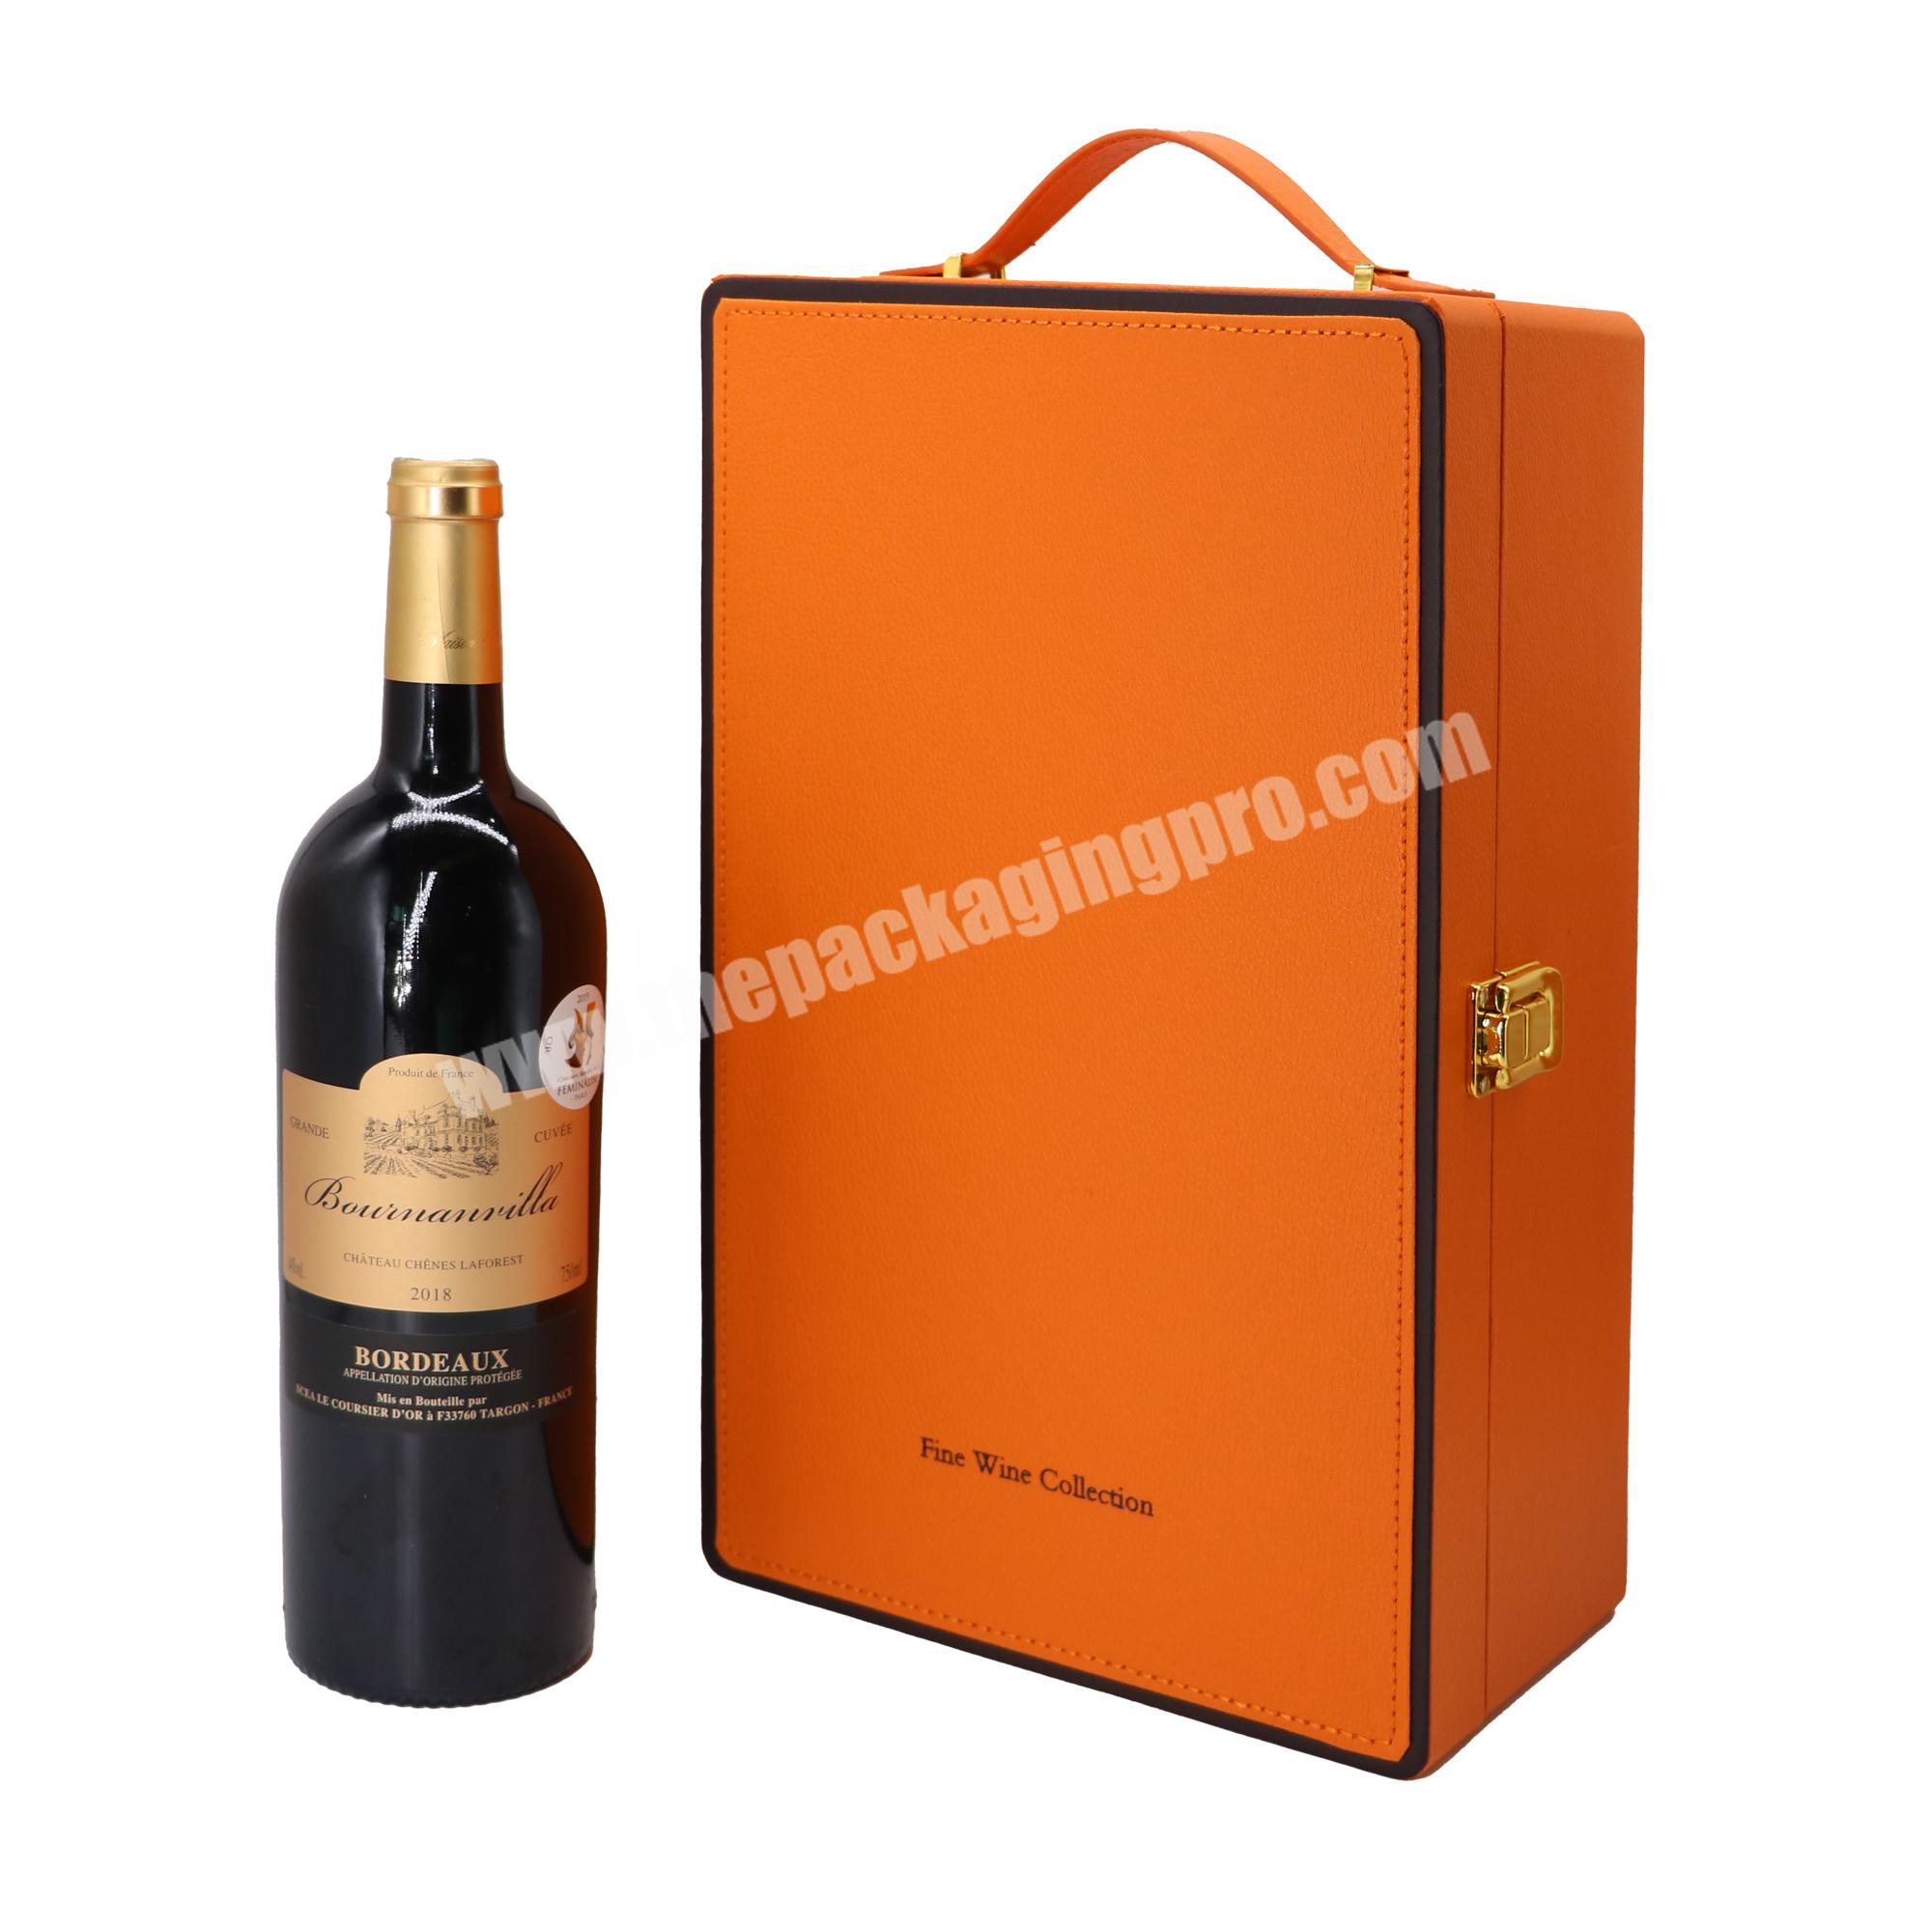 Luxury wine bottle packaging box custom bottle 2 wine gift box with accessories